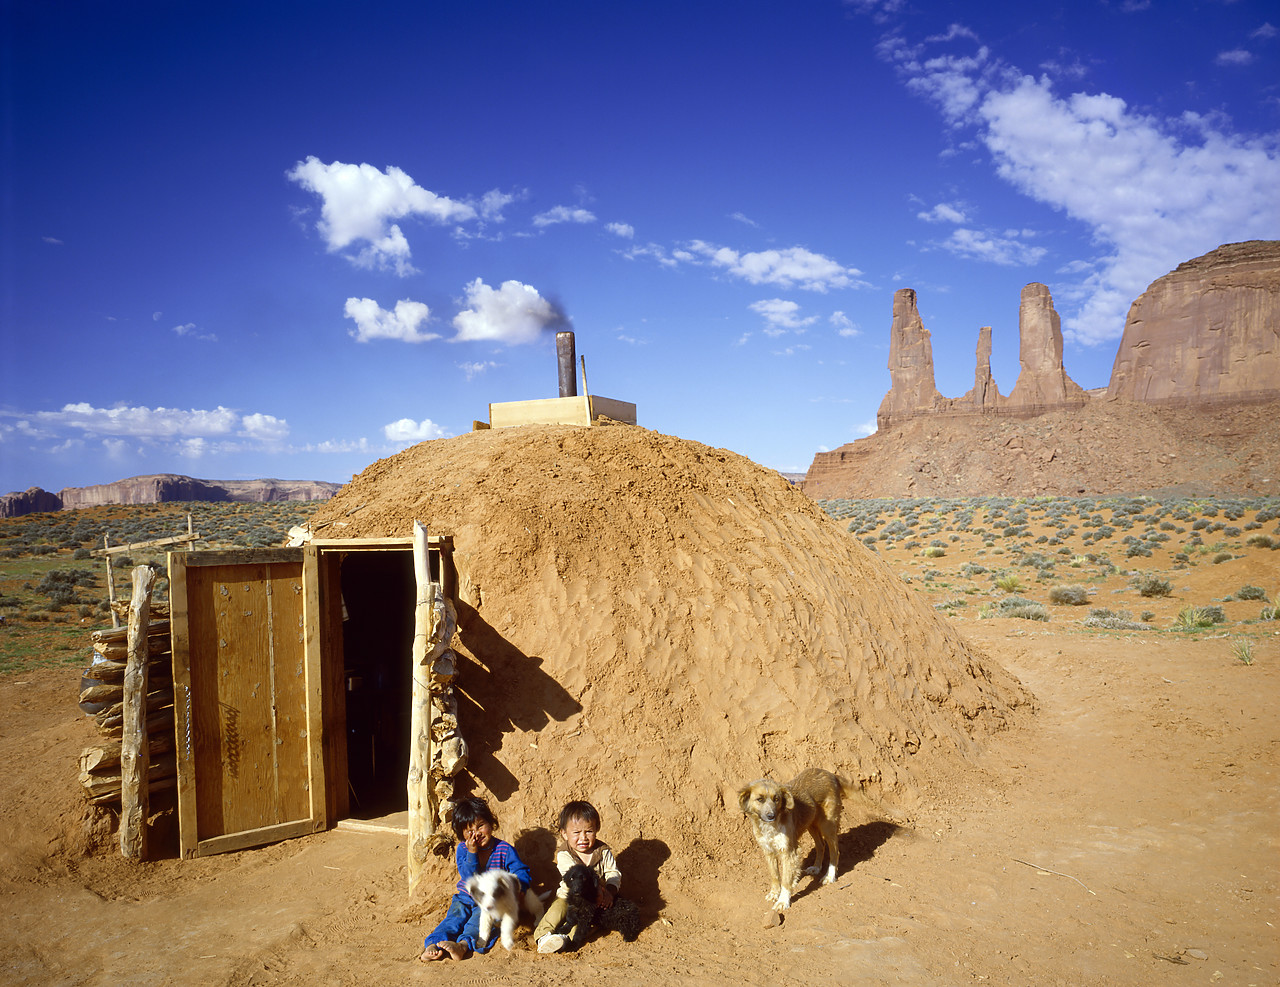 #85424-2 - Navajo Indian Hogan, Monument Valley Tribal Park, Arizona, USA